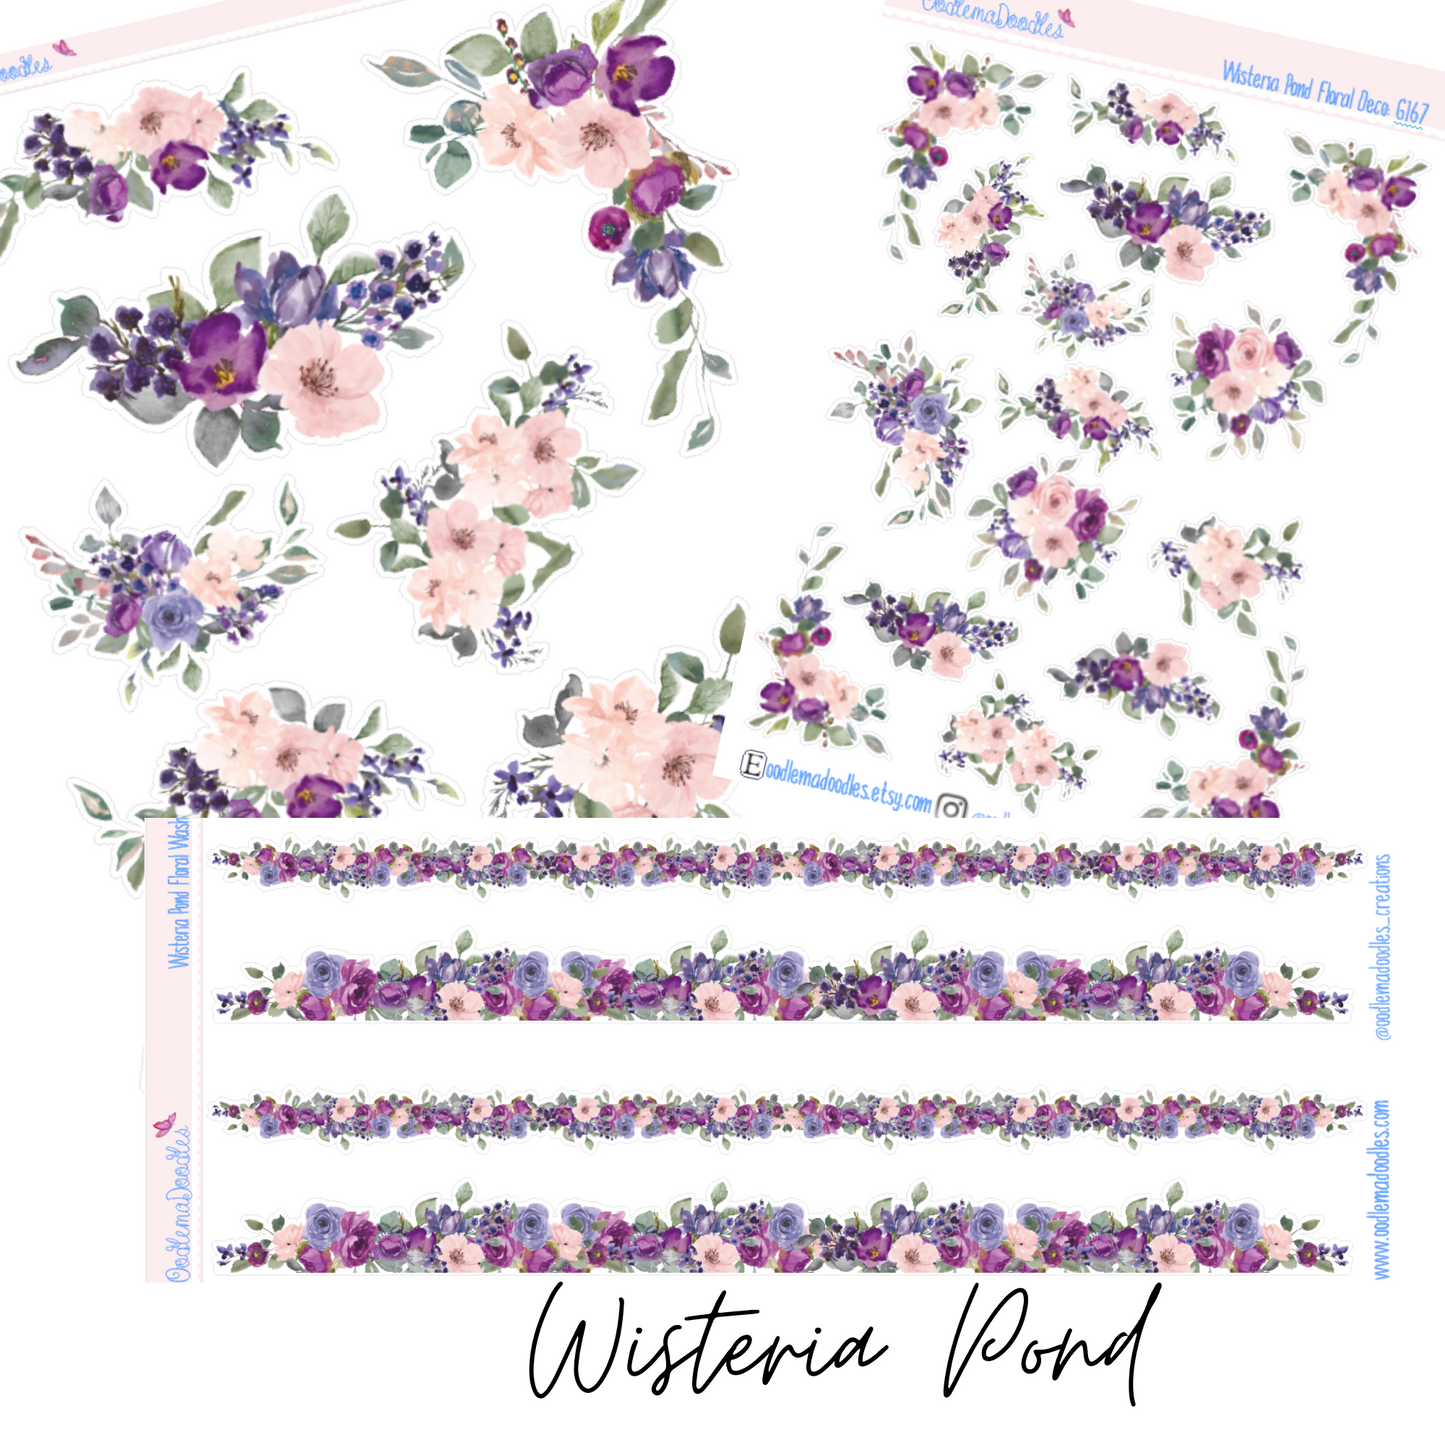 Wisteria Pond Addon & Extra Washi Options